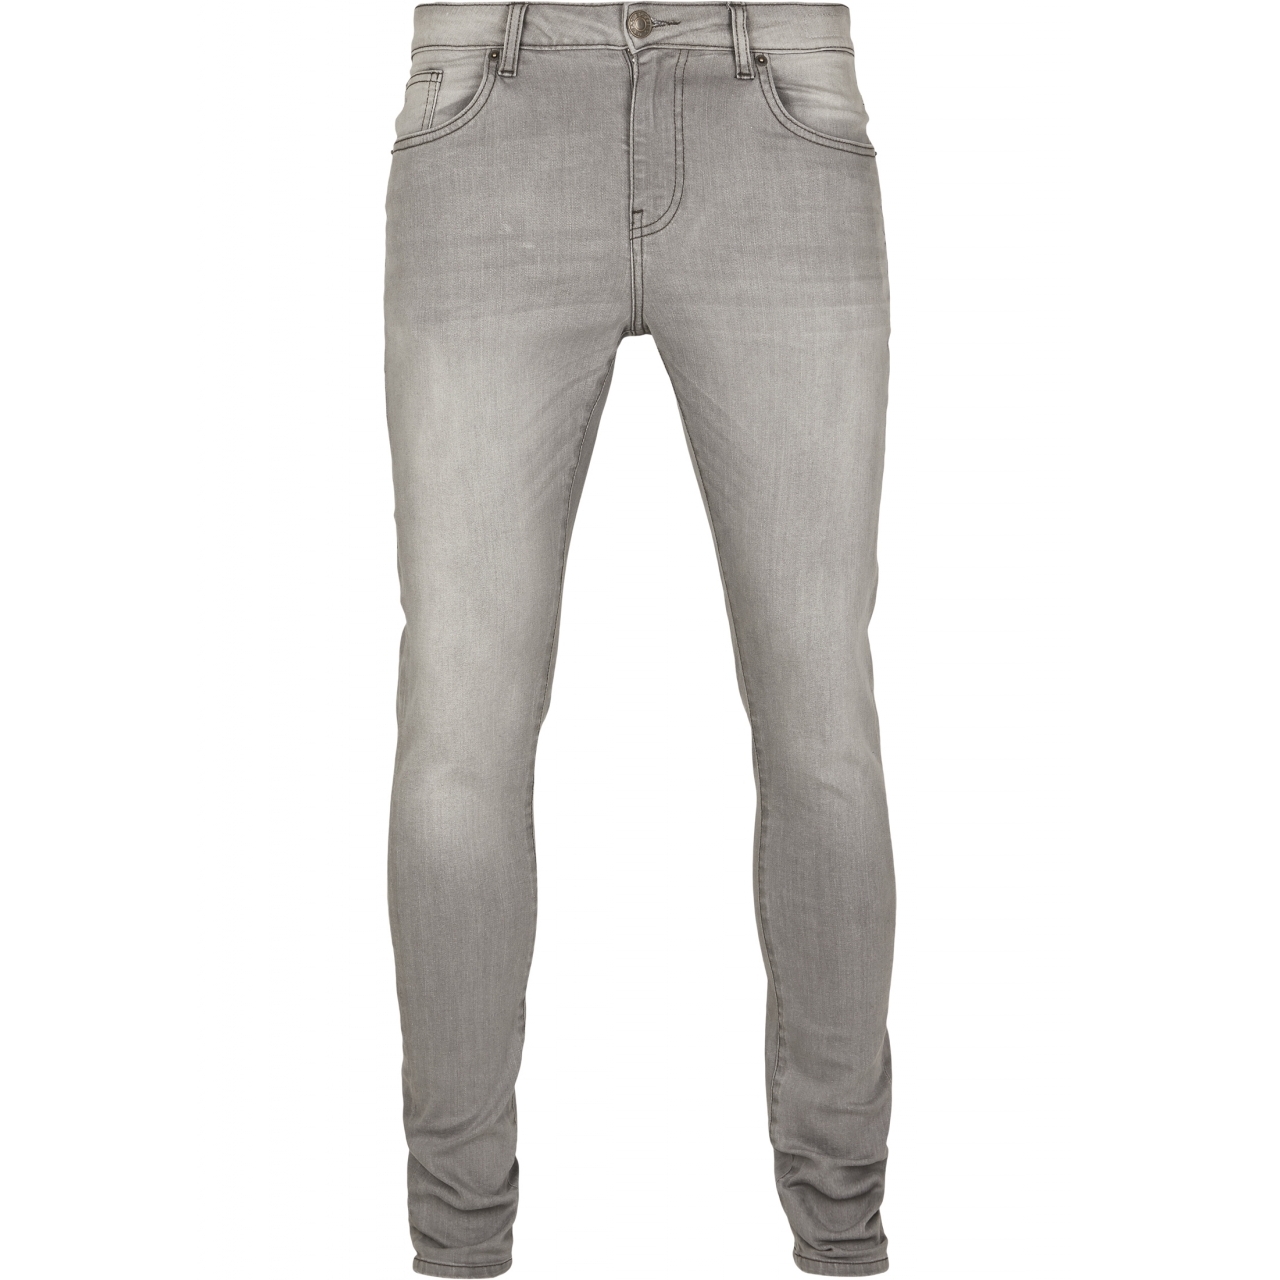 Džíny Urban Classics Slim Fit Jeans - šedé, 28/32